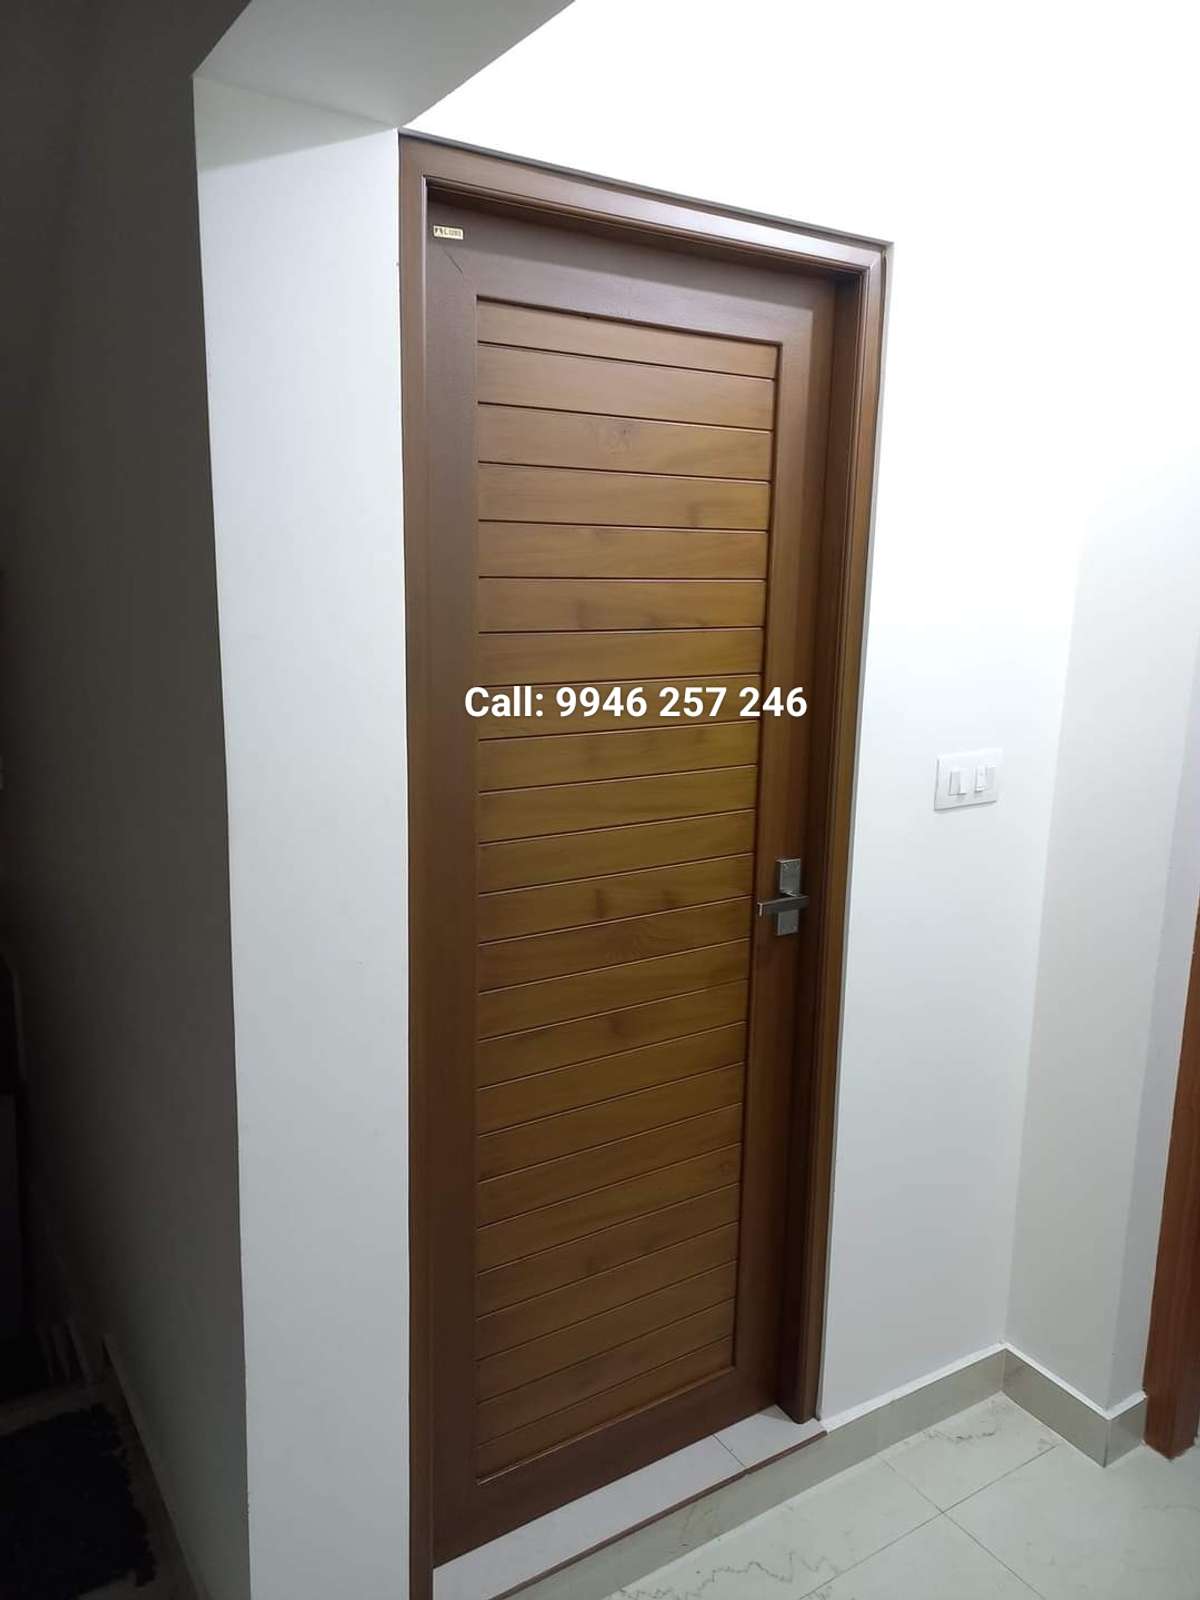 Fiber Bathroom Doors | All Kerala Available | 9946 257 246

#FibreDoors #DoorDesigns #doors #upvcdoors #BathroomDoor 